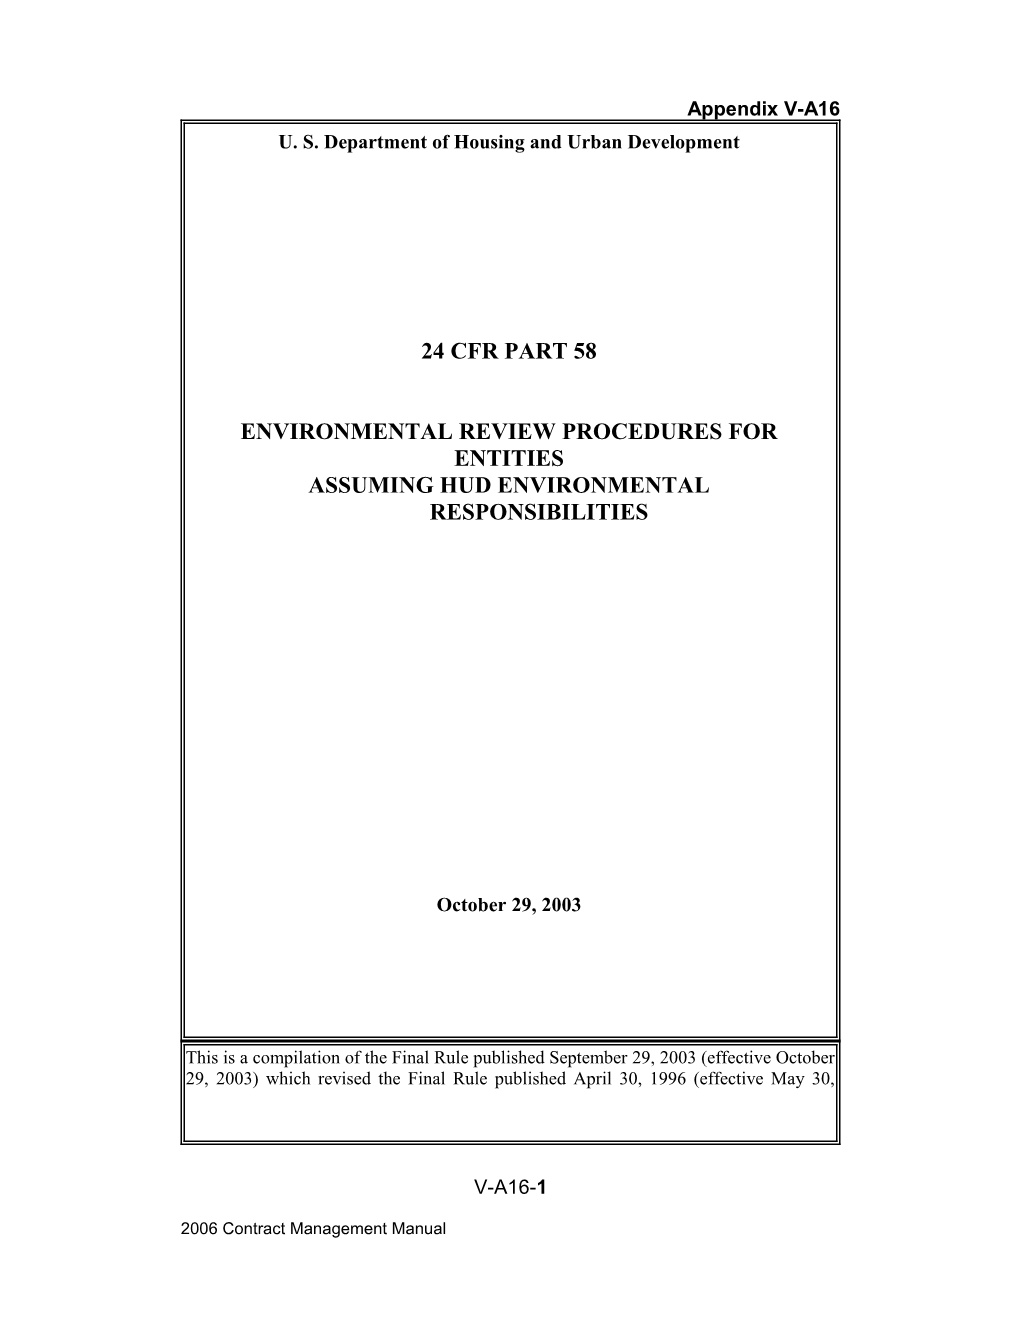 Part 58 Environmental Review Procedures for Entities Assuming Hud Environmental Responsibilities